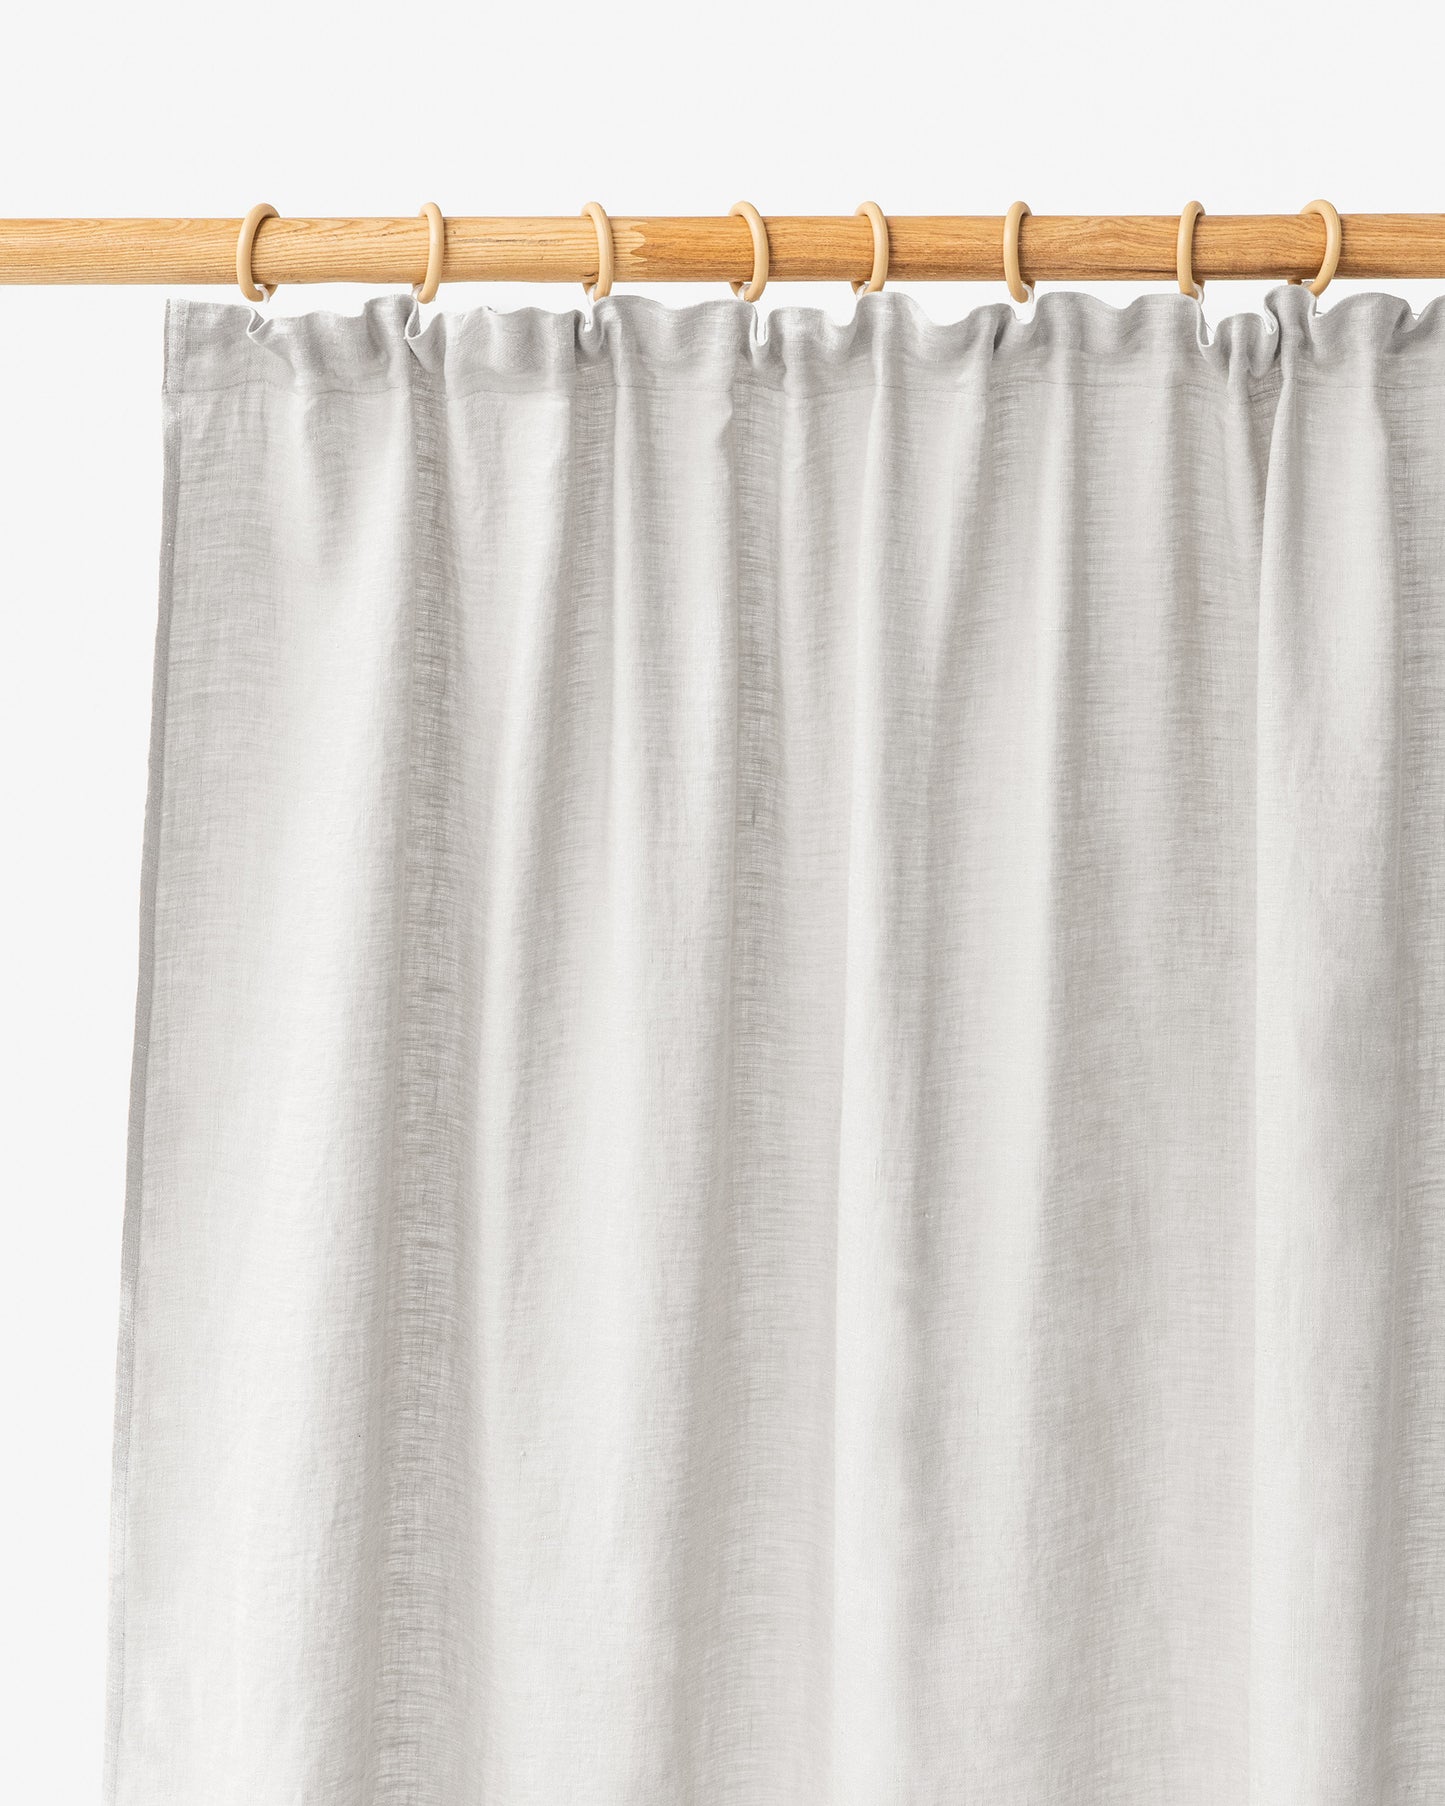 Pencil pleat linen curtain panel (1 pcs) in Light gray (sale)